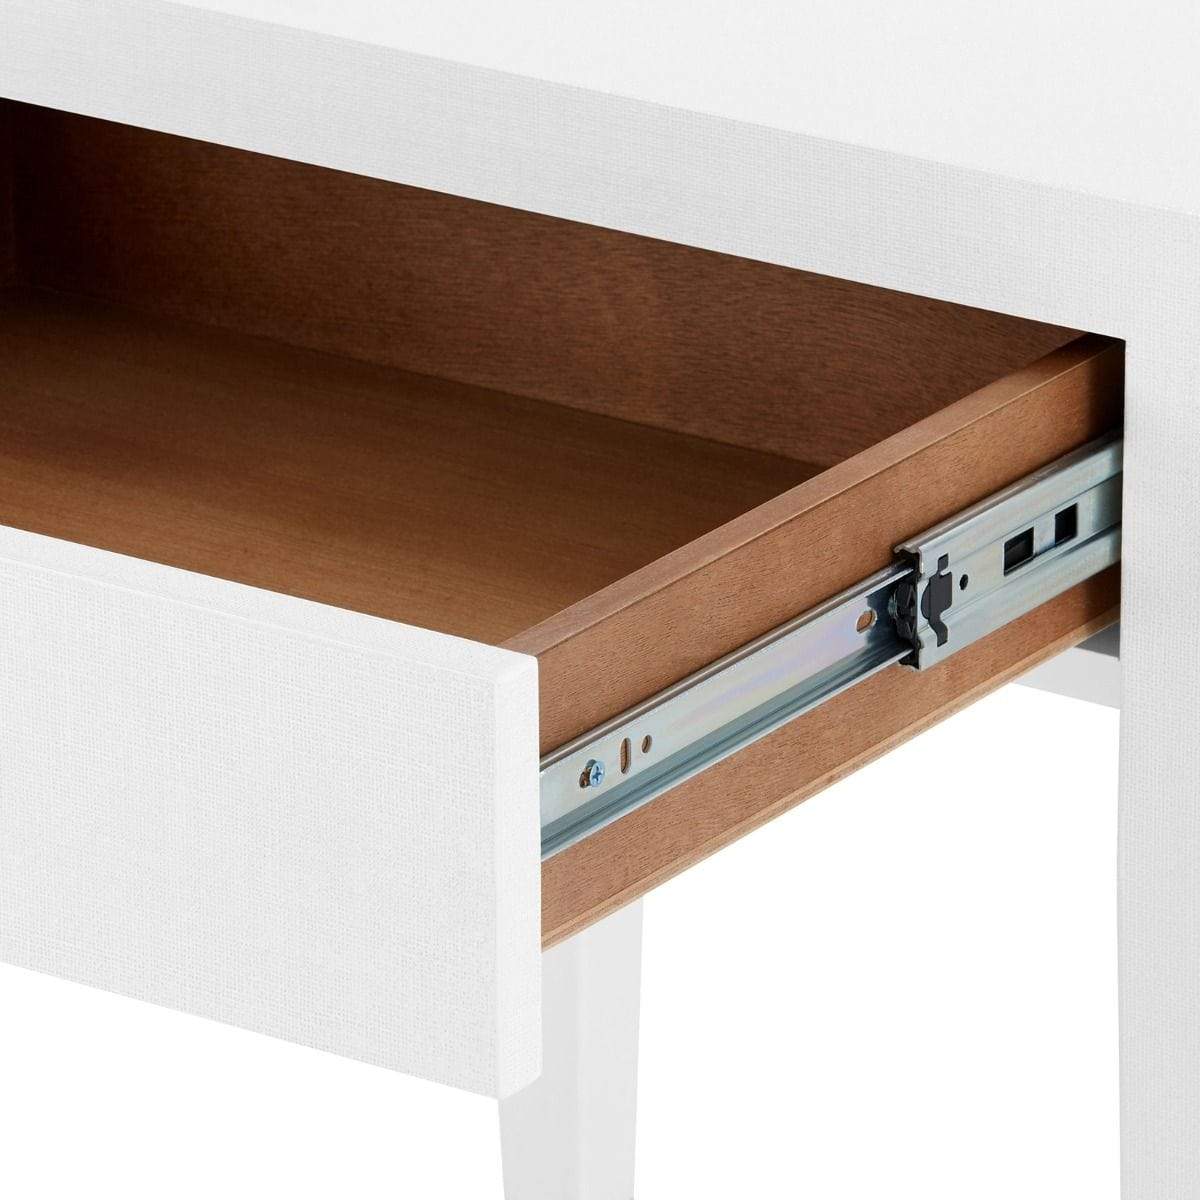 Villa & House Claudette 1-Drawer Side Table - Grey Furniture